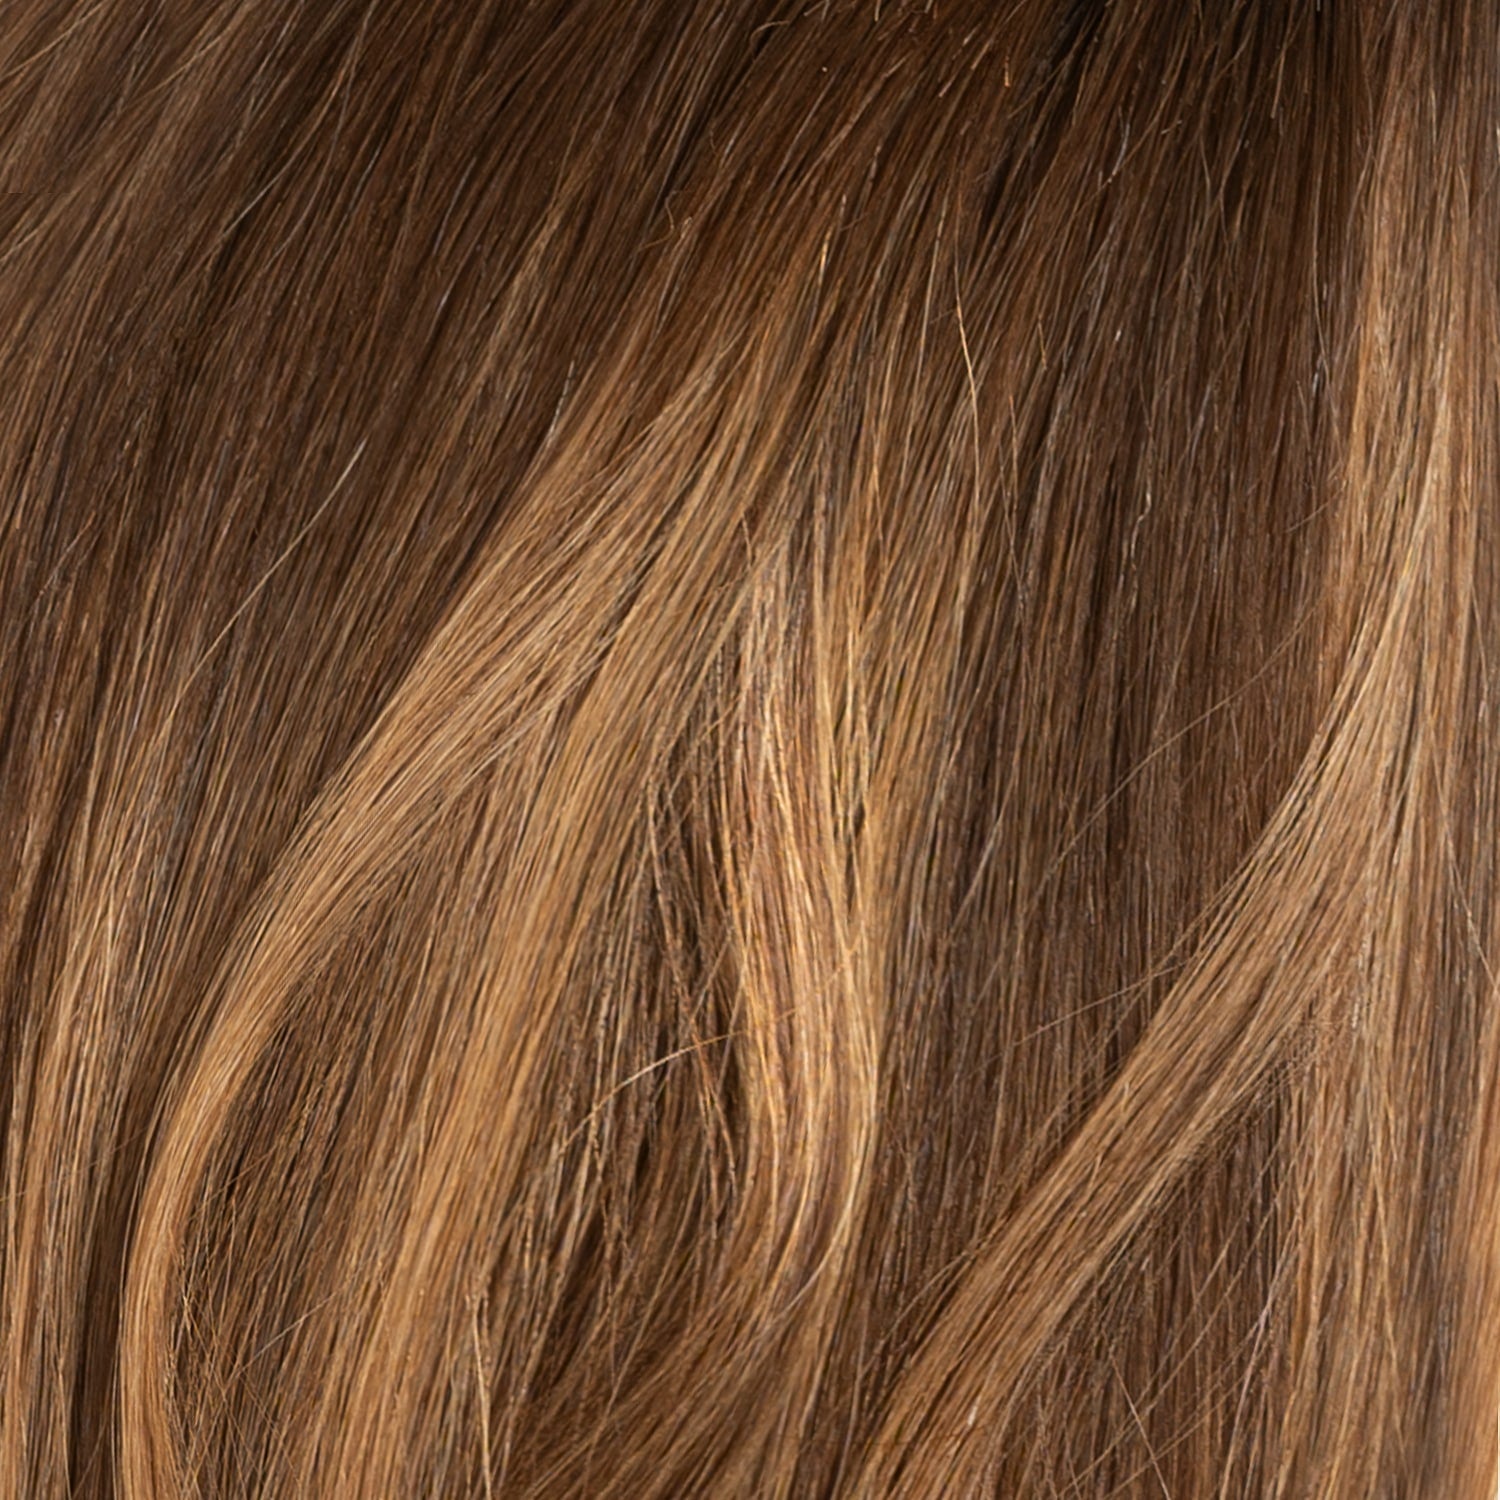 Halo hair extensions - Warm Brown Balayage 2+7